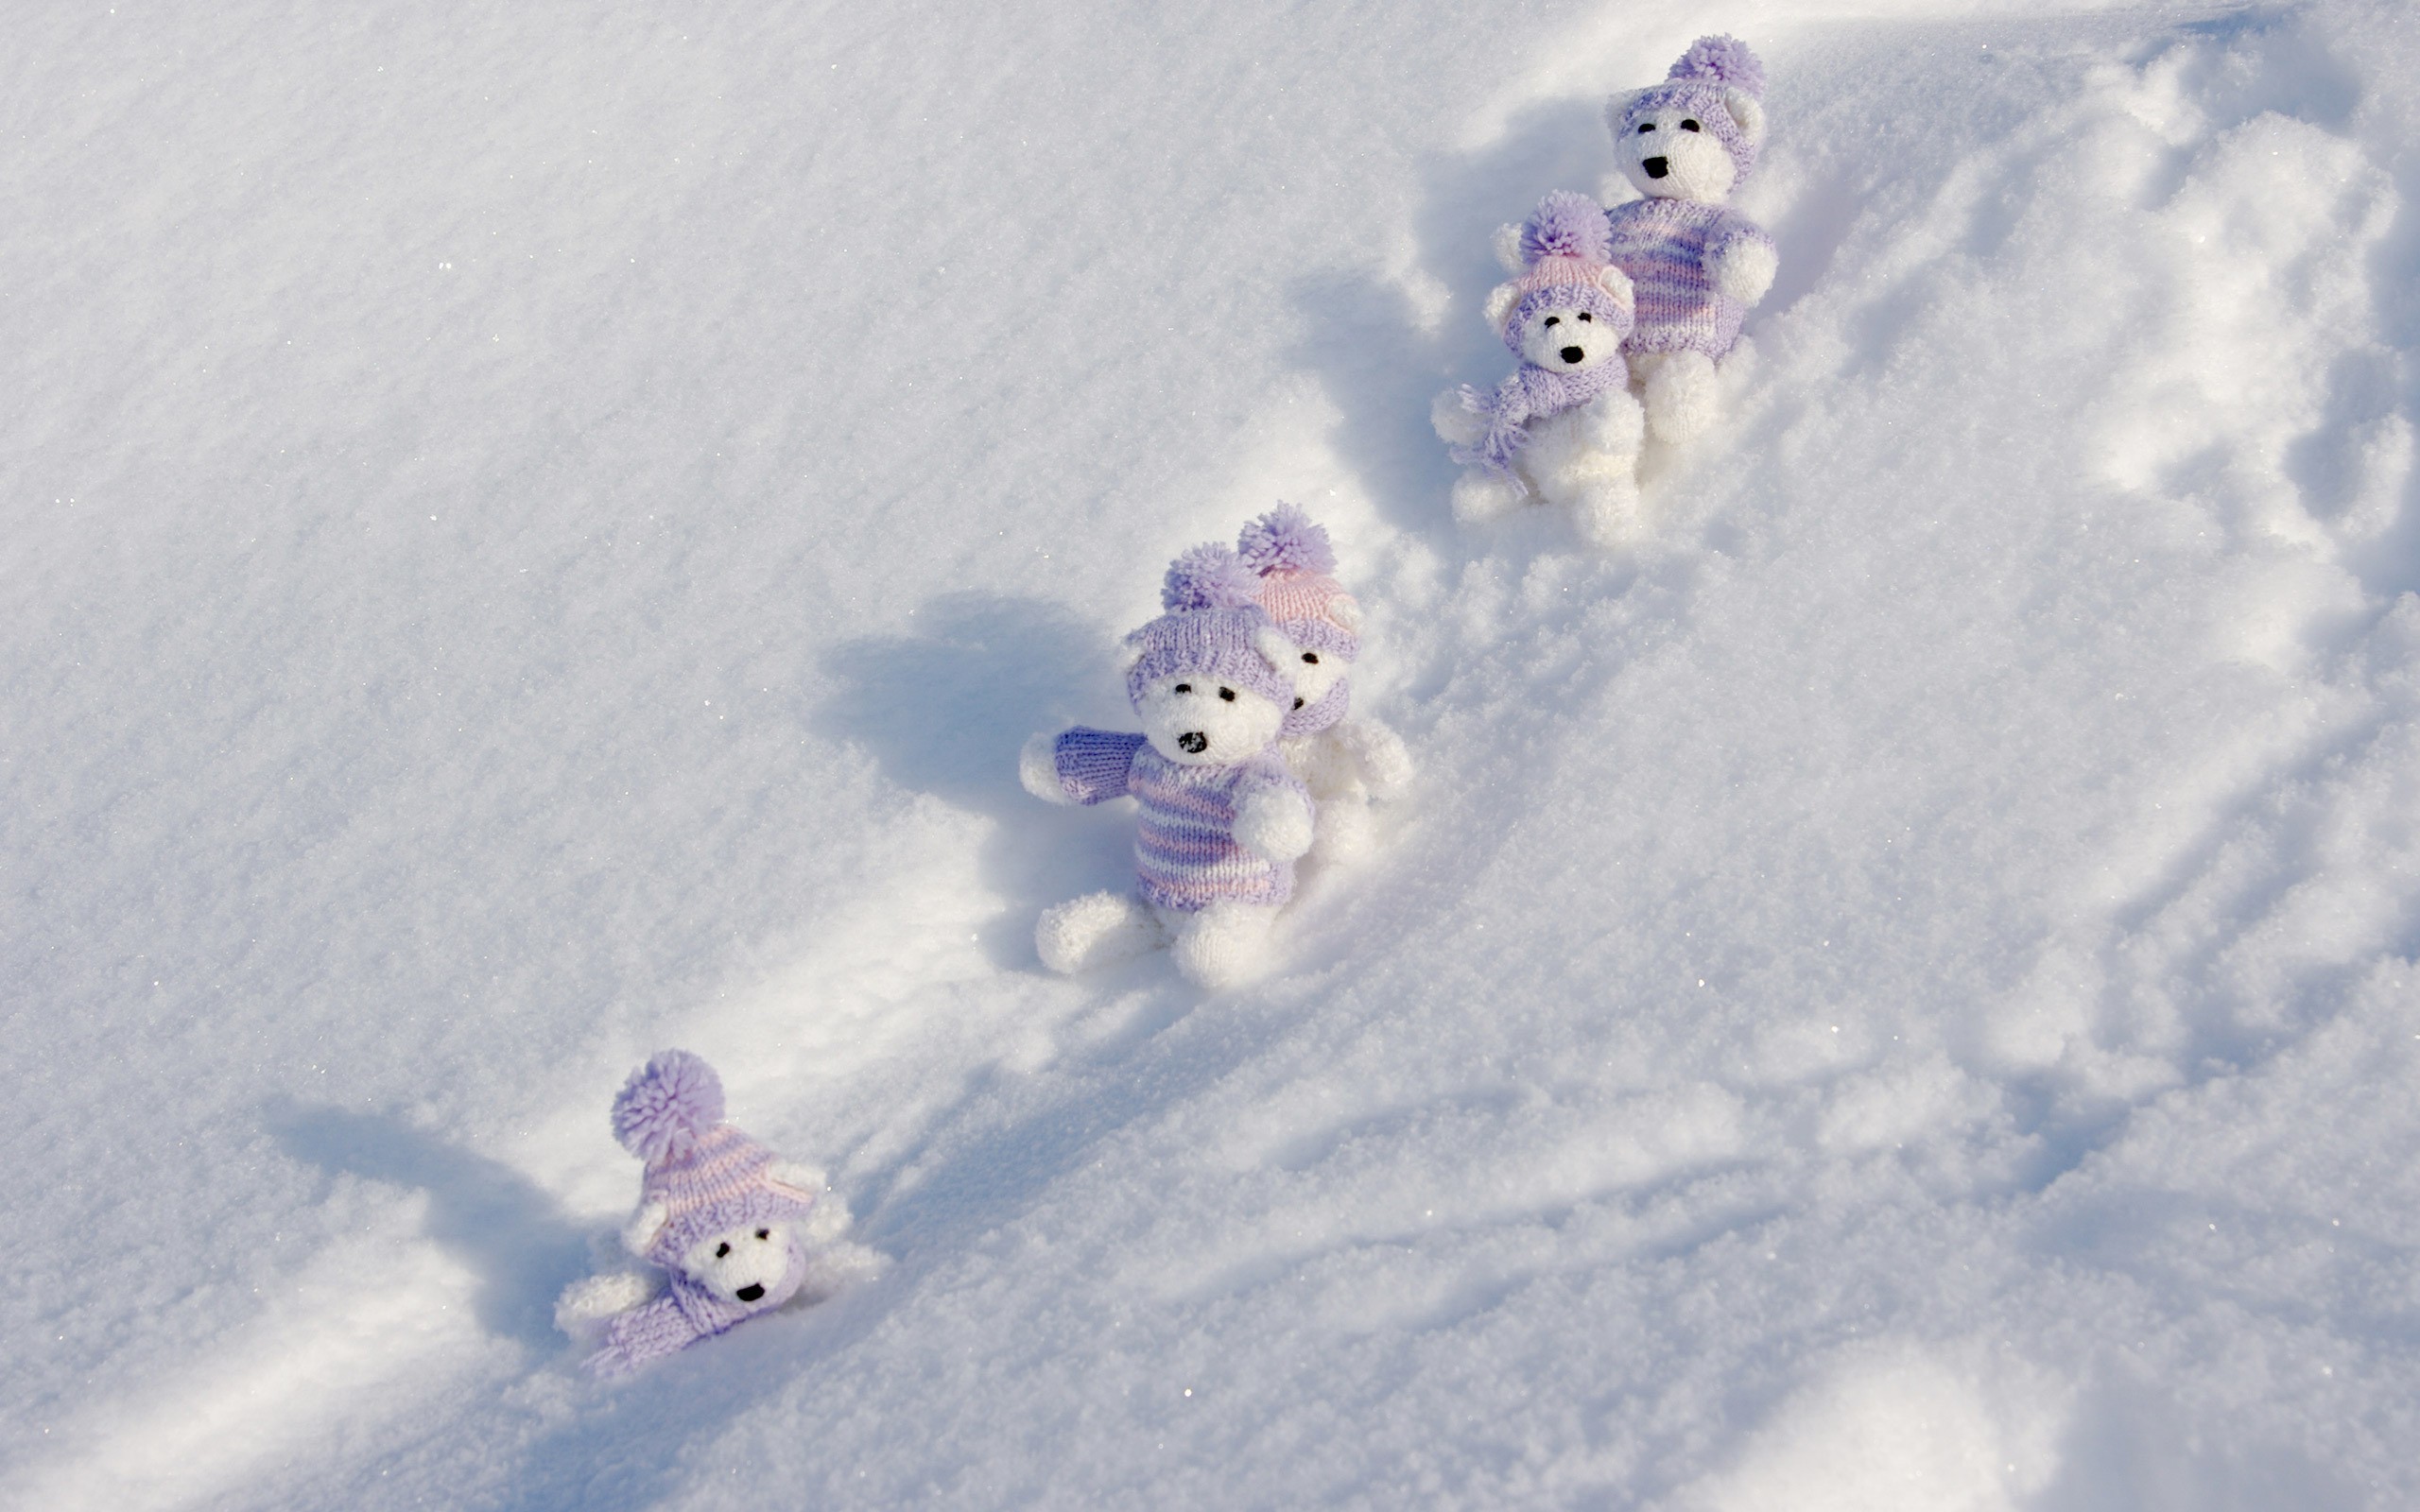 2560x1600 Winter Teddy Bears wallpapers | Winter Teddy Bears stock photos